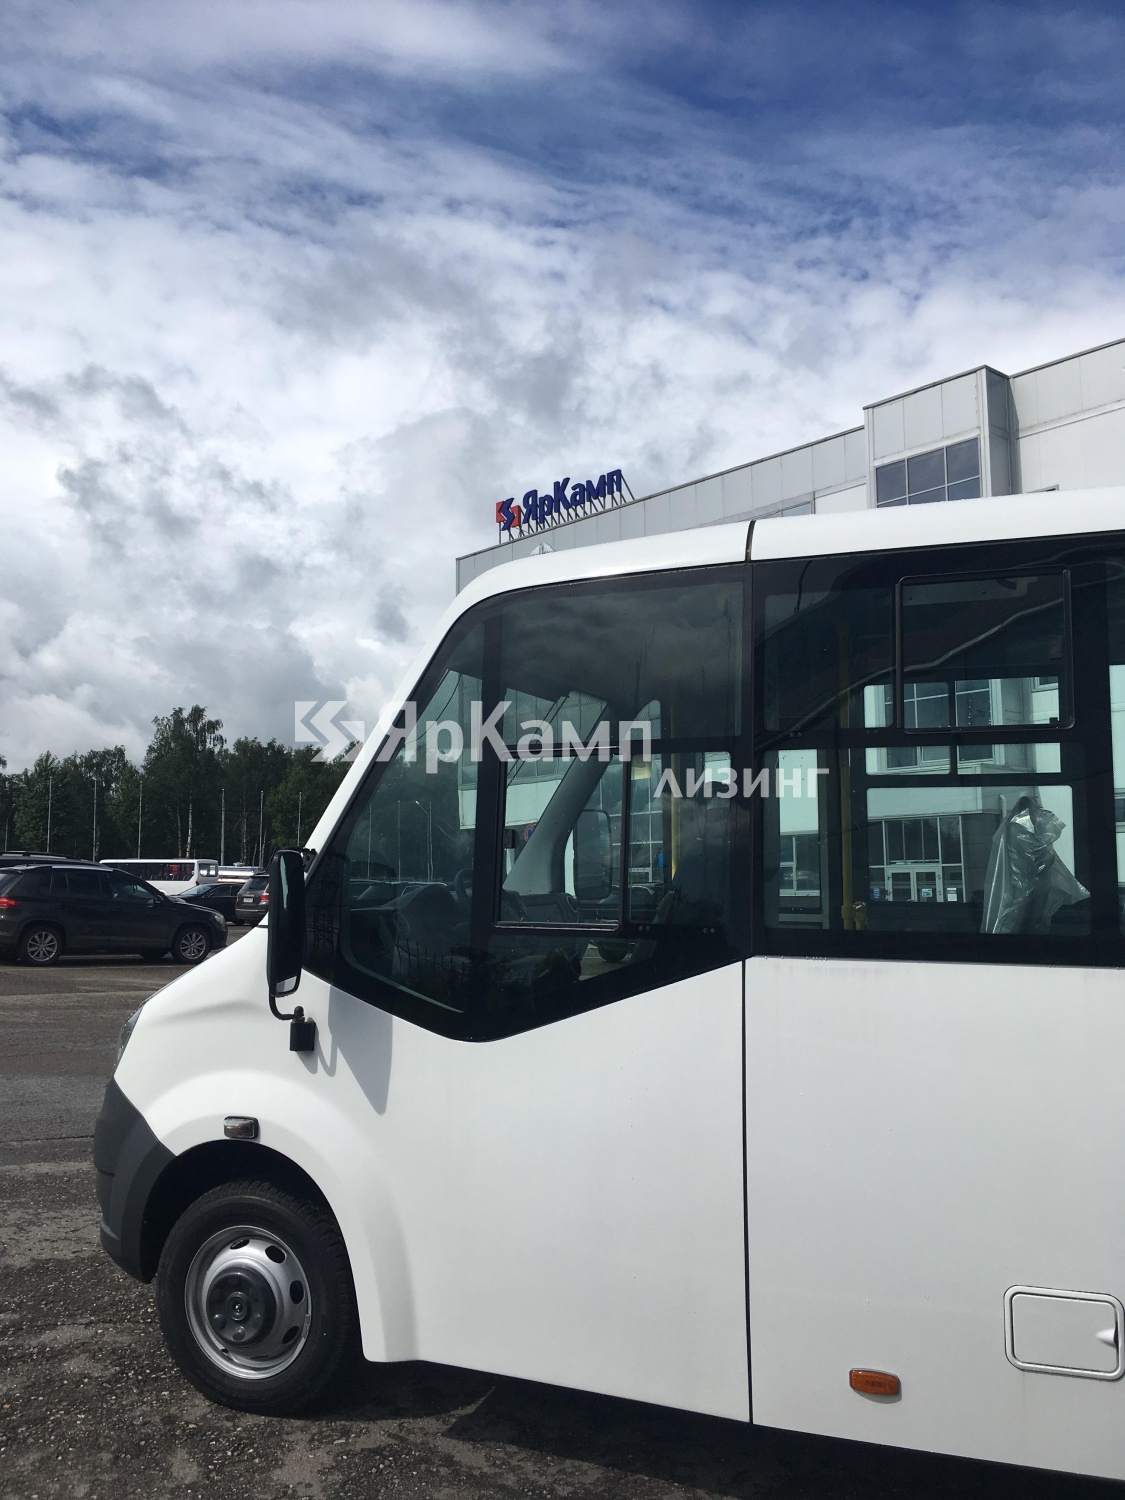 "ЯрКамп-Лизинг" произвел передачу автобуса ГАЗ-А64R42